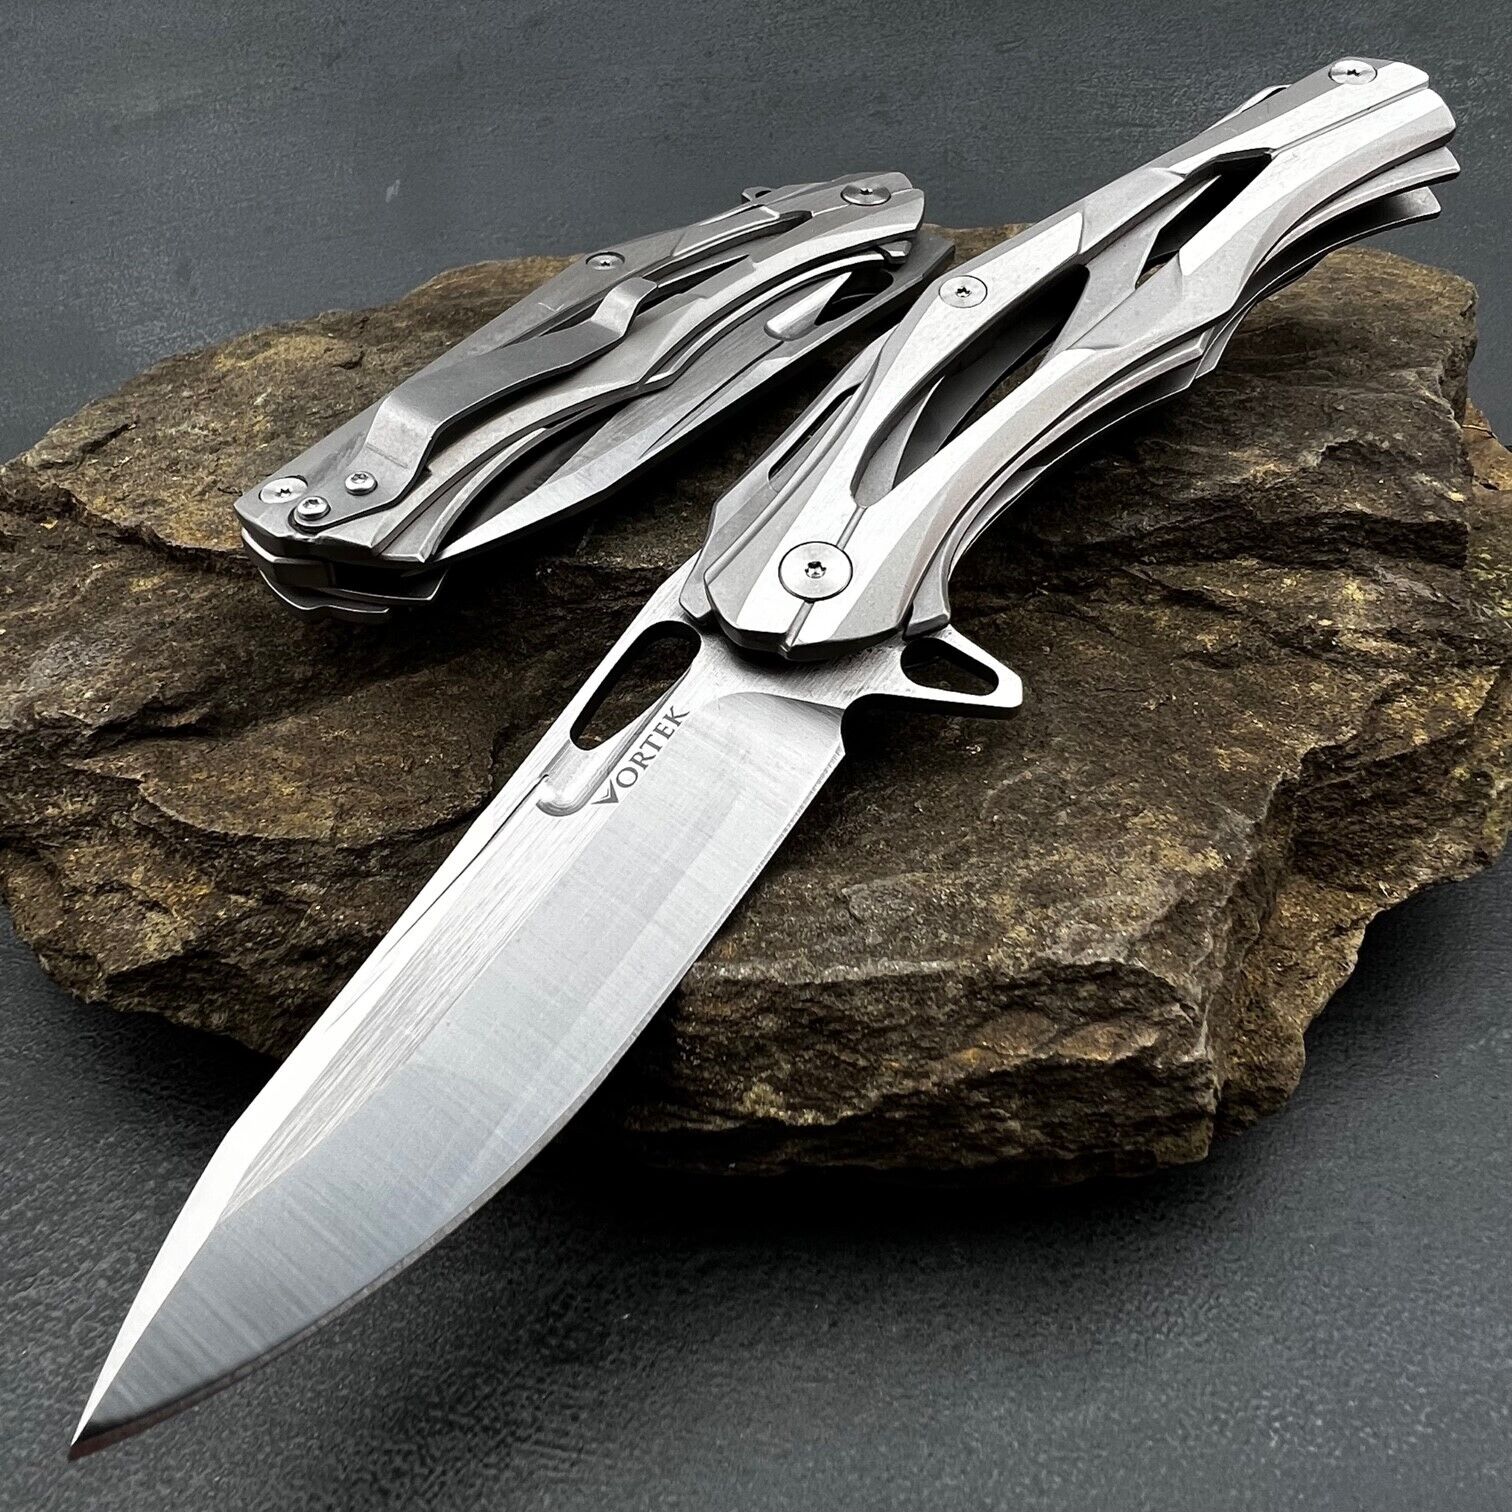 VORTEK KRONOS Silver Ball Bearing Heavy Duty D2 Blade Folding EDC Pocket Knife